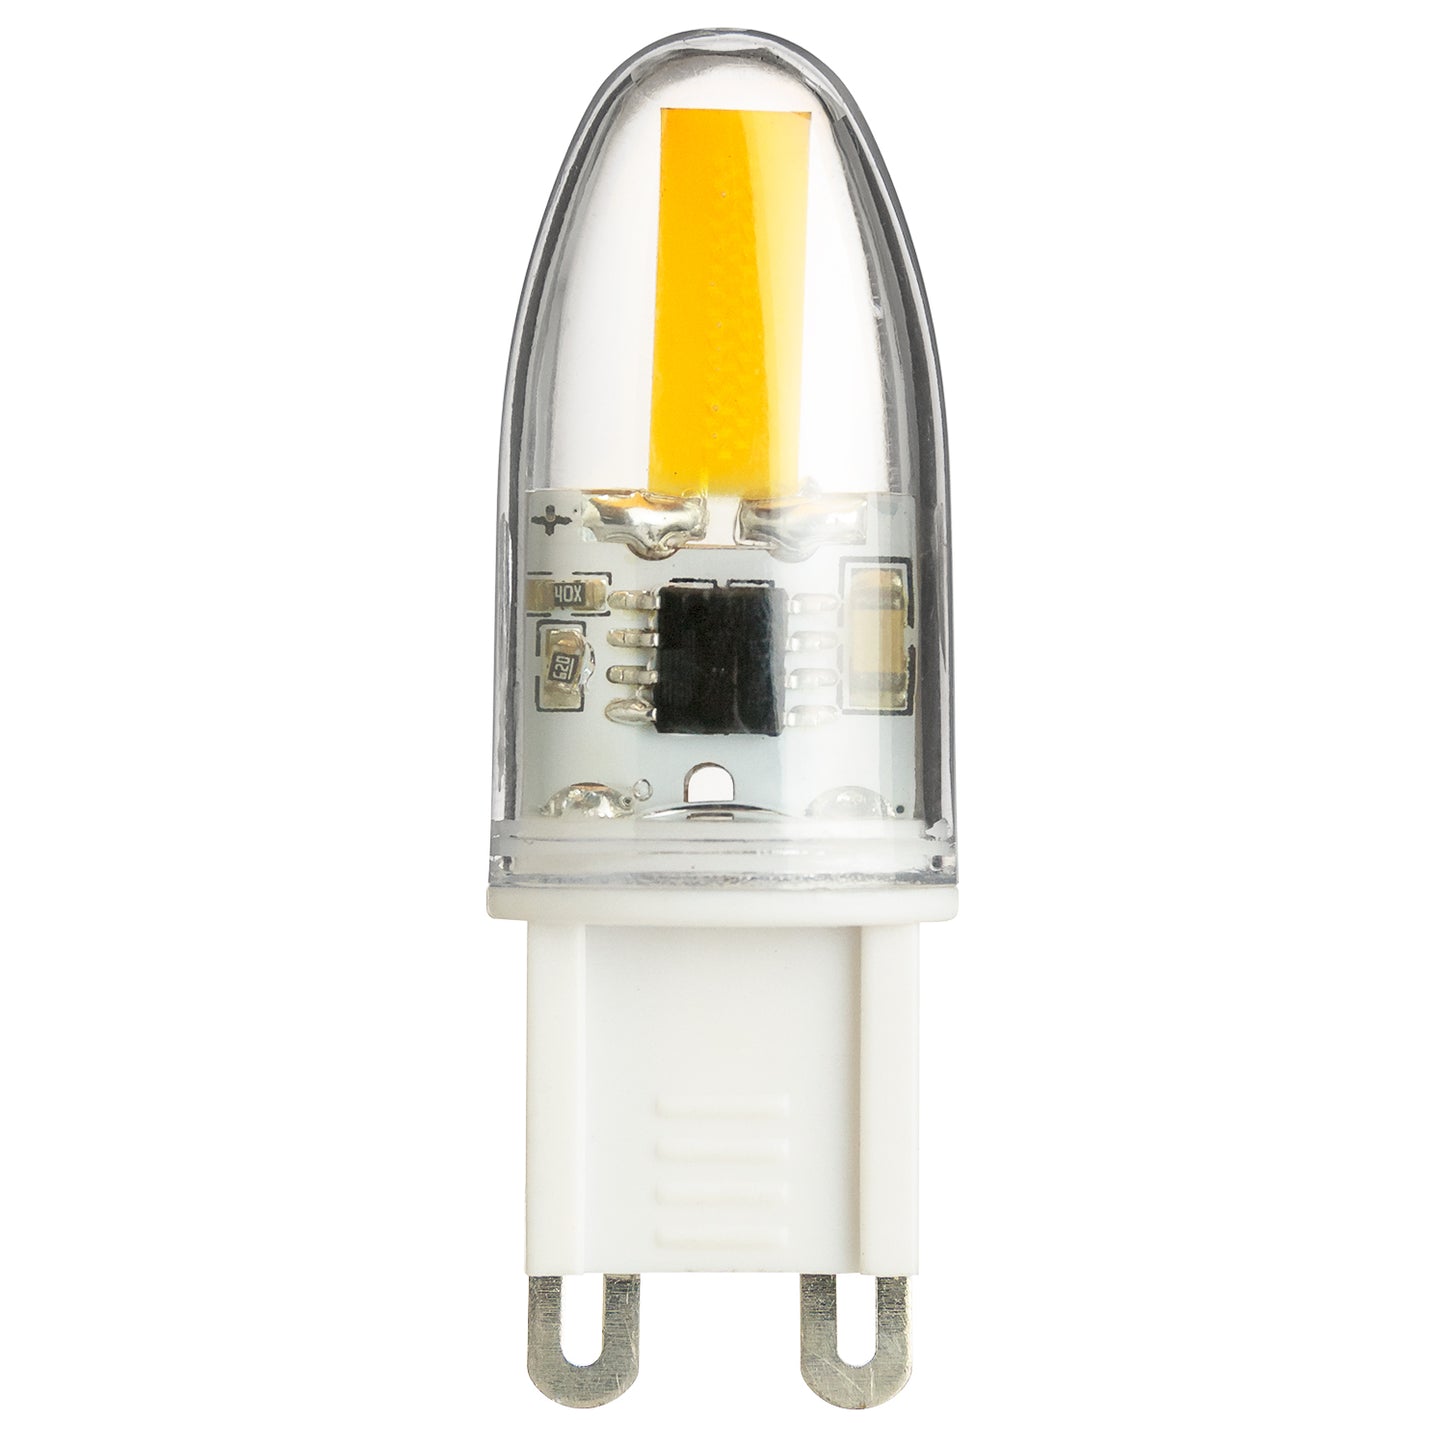 Sunlite LED G9 Lamp Light Bulb, 2.5 Watts (25 Watt Halogen Equivalent), 250 Lumens, Bi-Pin Base, Dimmable, Clear, ETL Listed, RoHS Compliant, 30K Warm White - 6 Pack